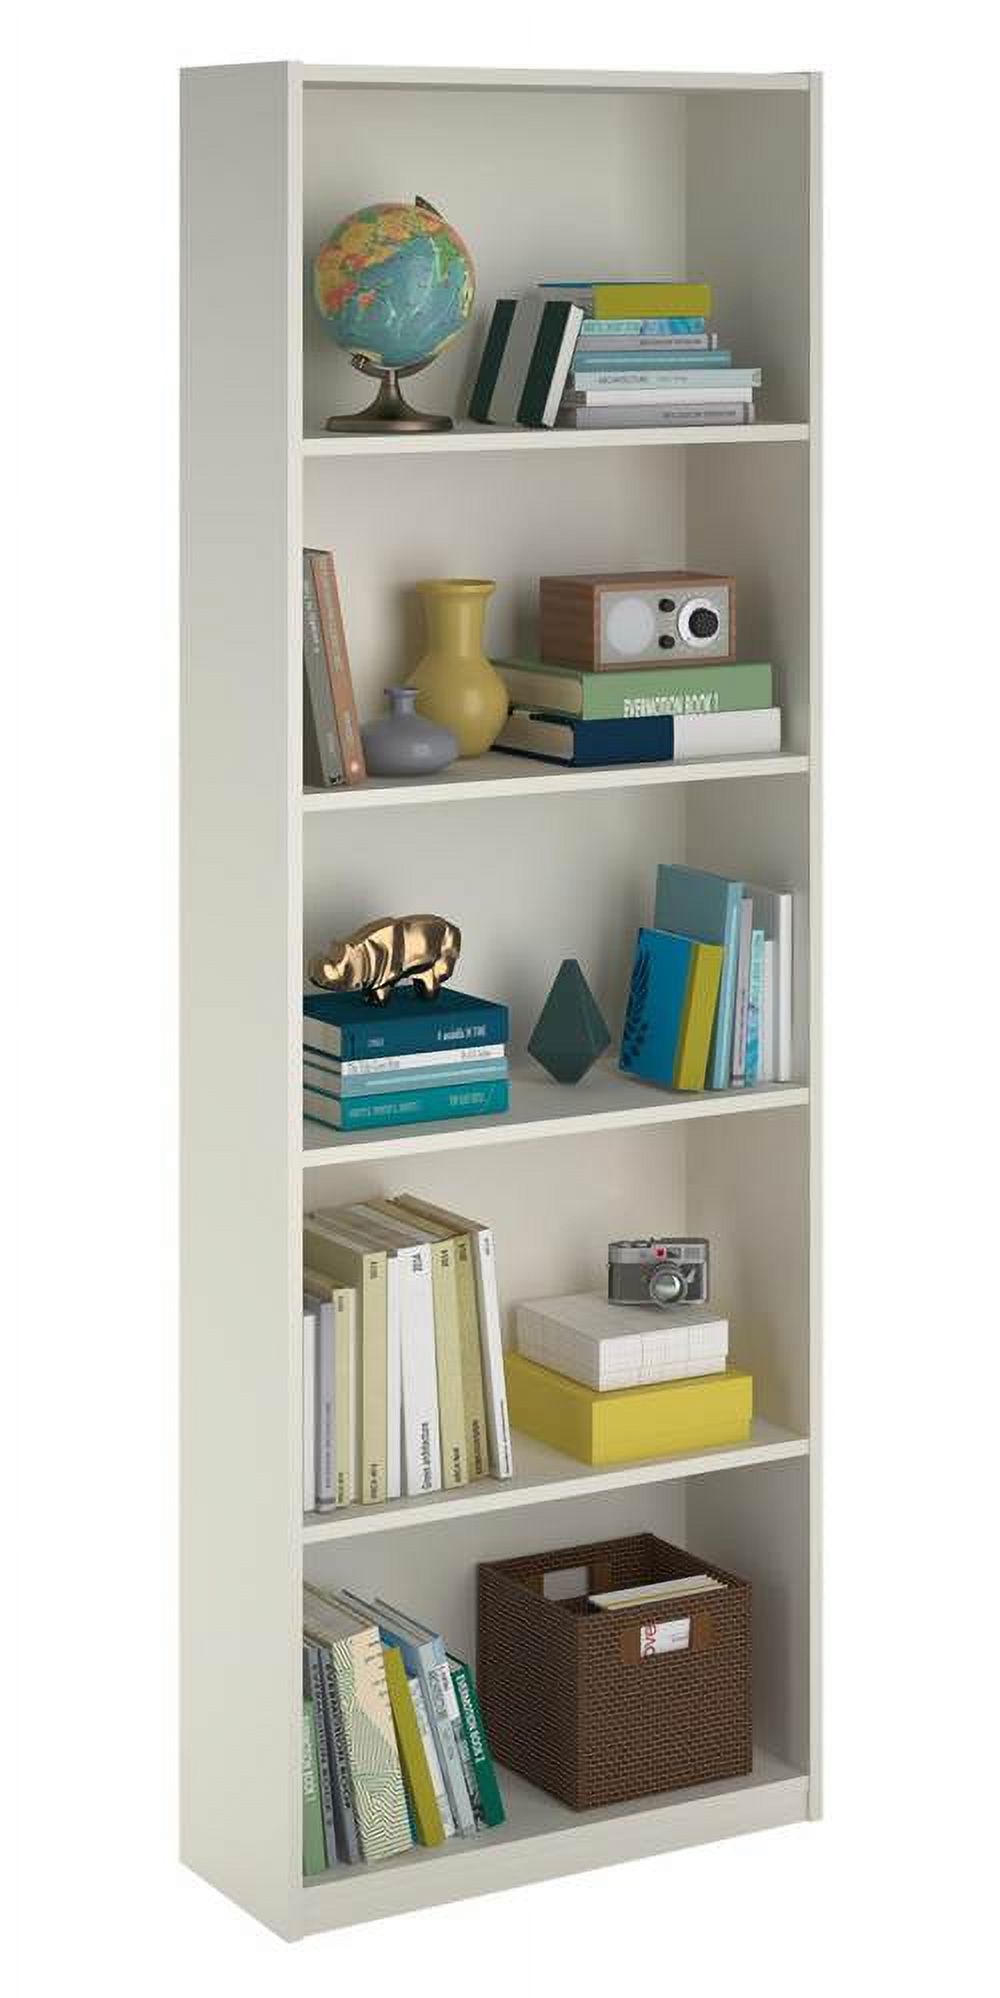 Ameriwood 5-Shelf Bookcase, Multiple Colors - image 3 of 4